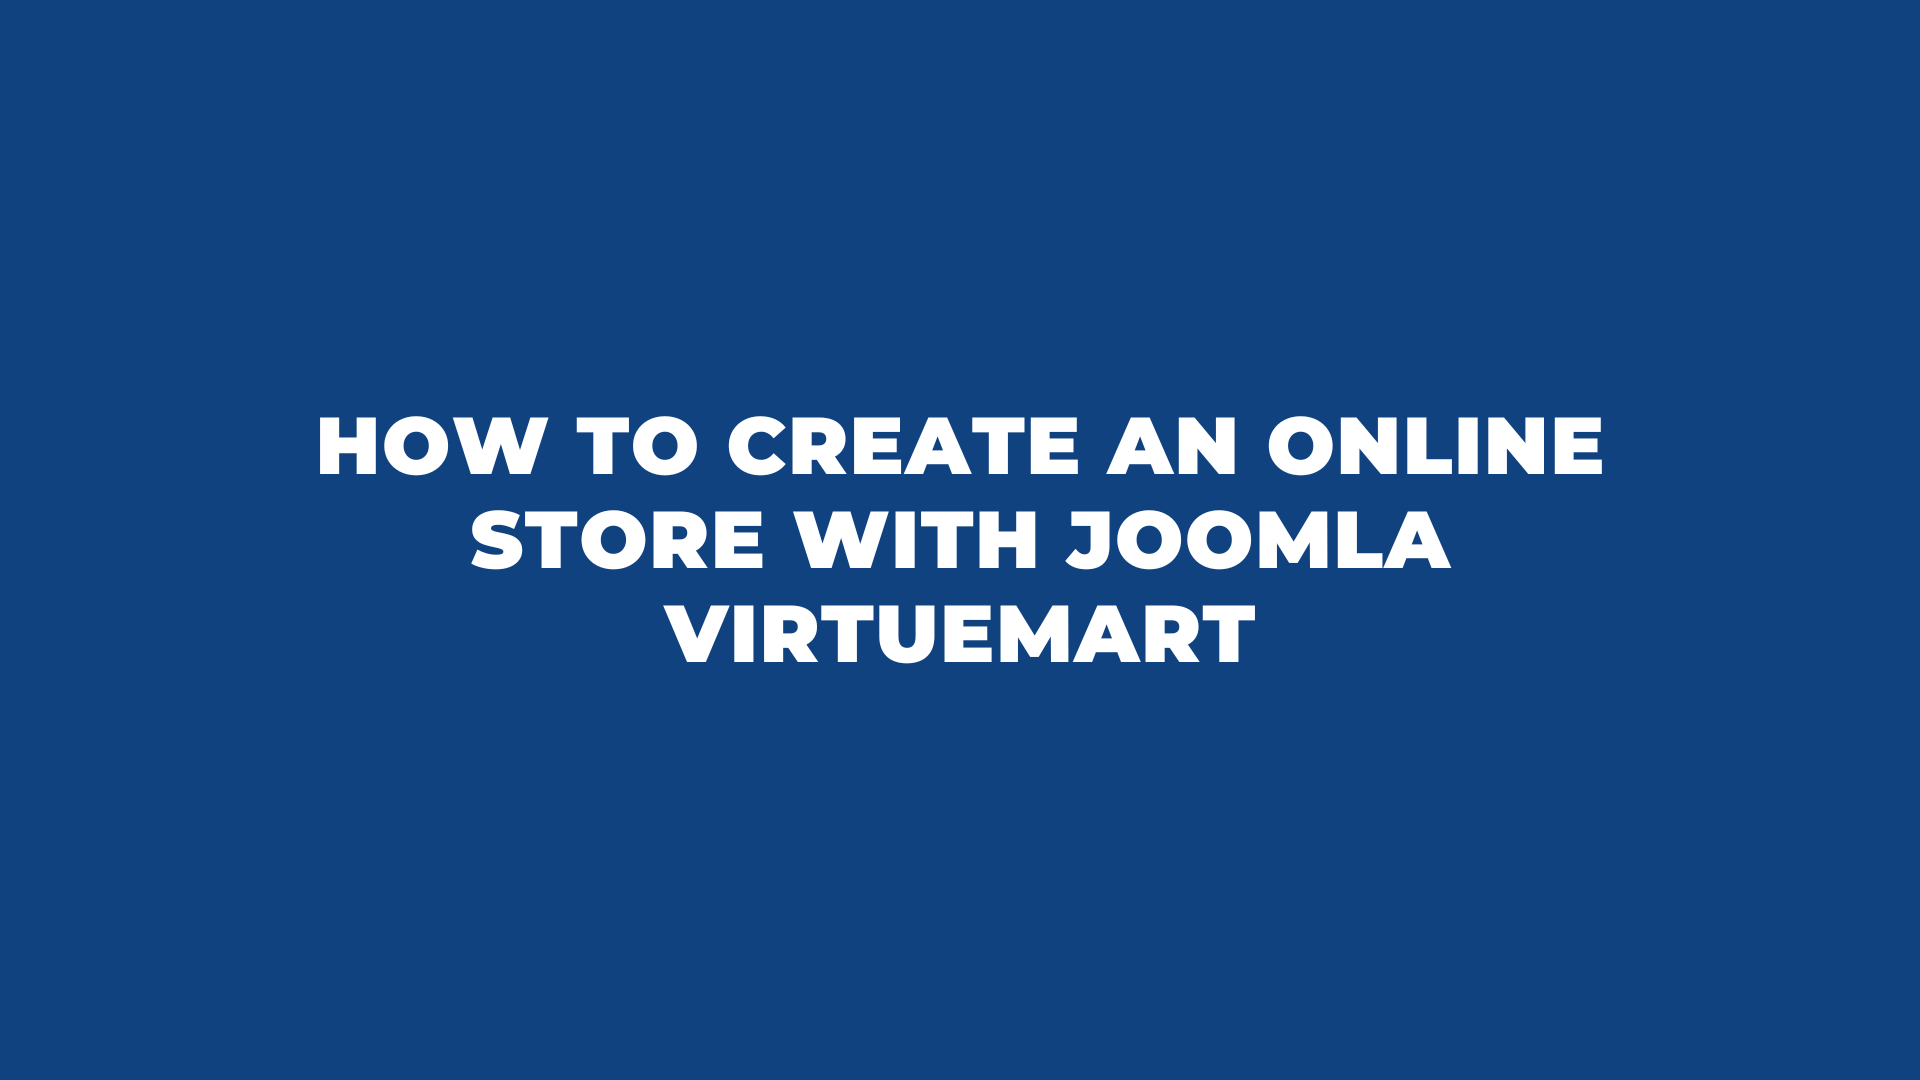 ordasoft Joomla News: How to create an online store with Joomla VirtueMart